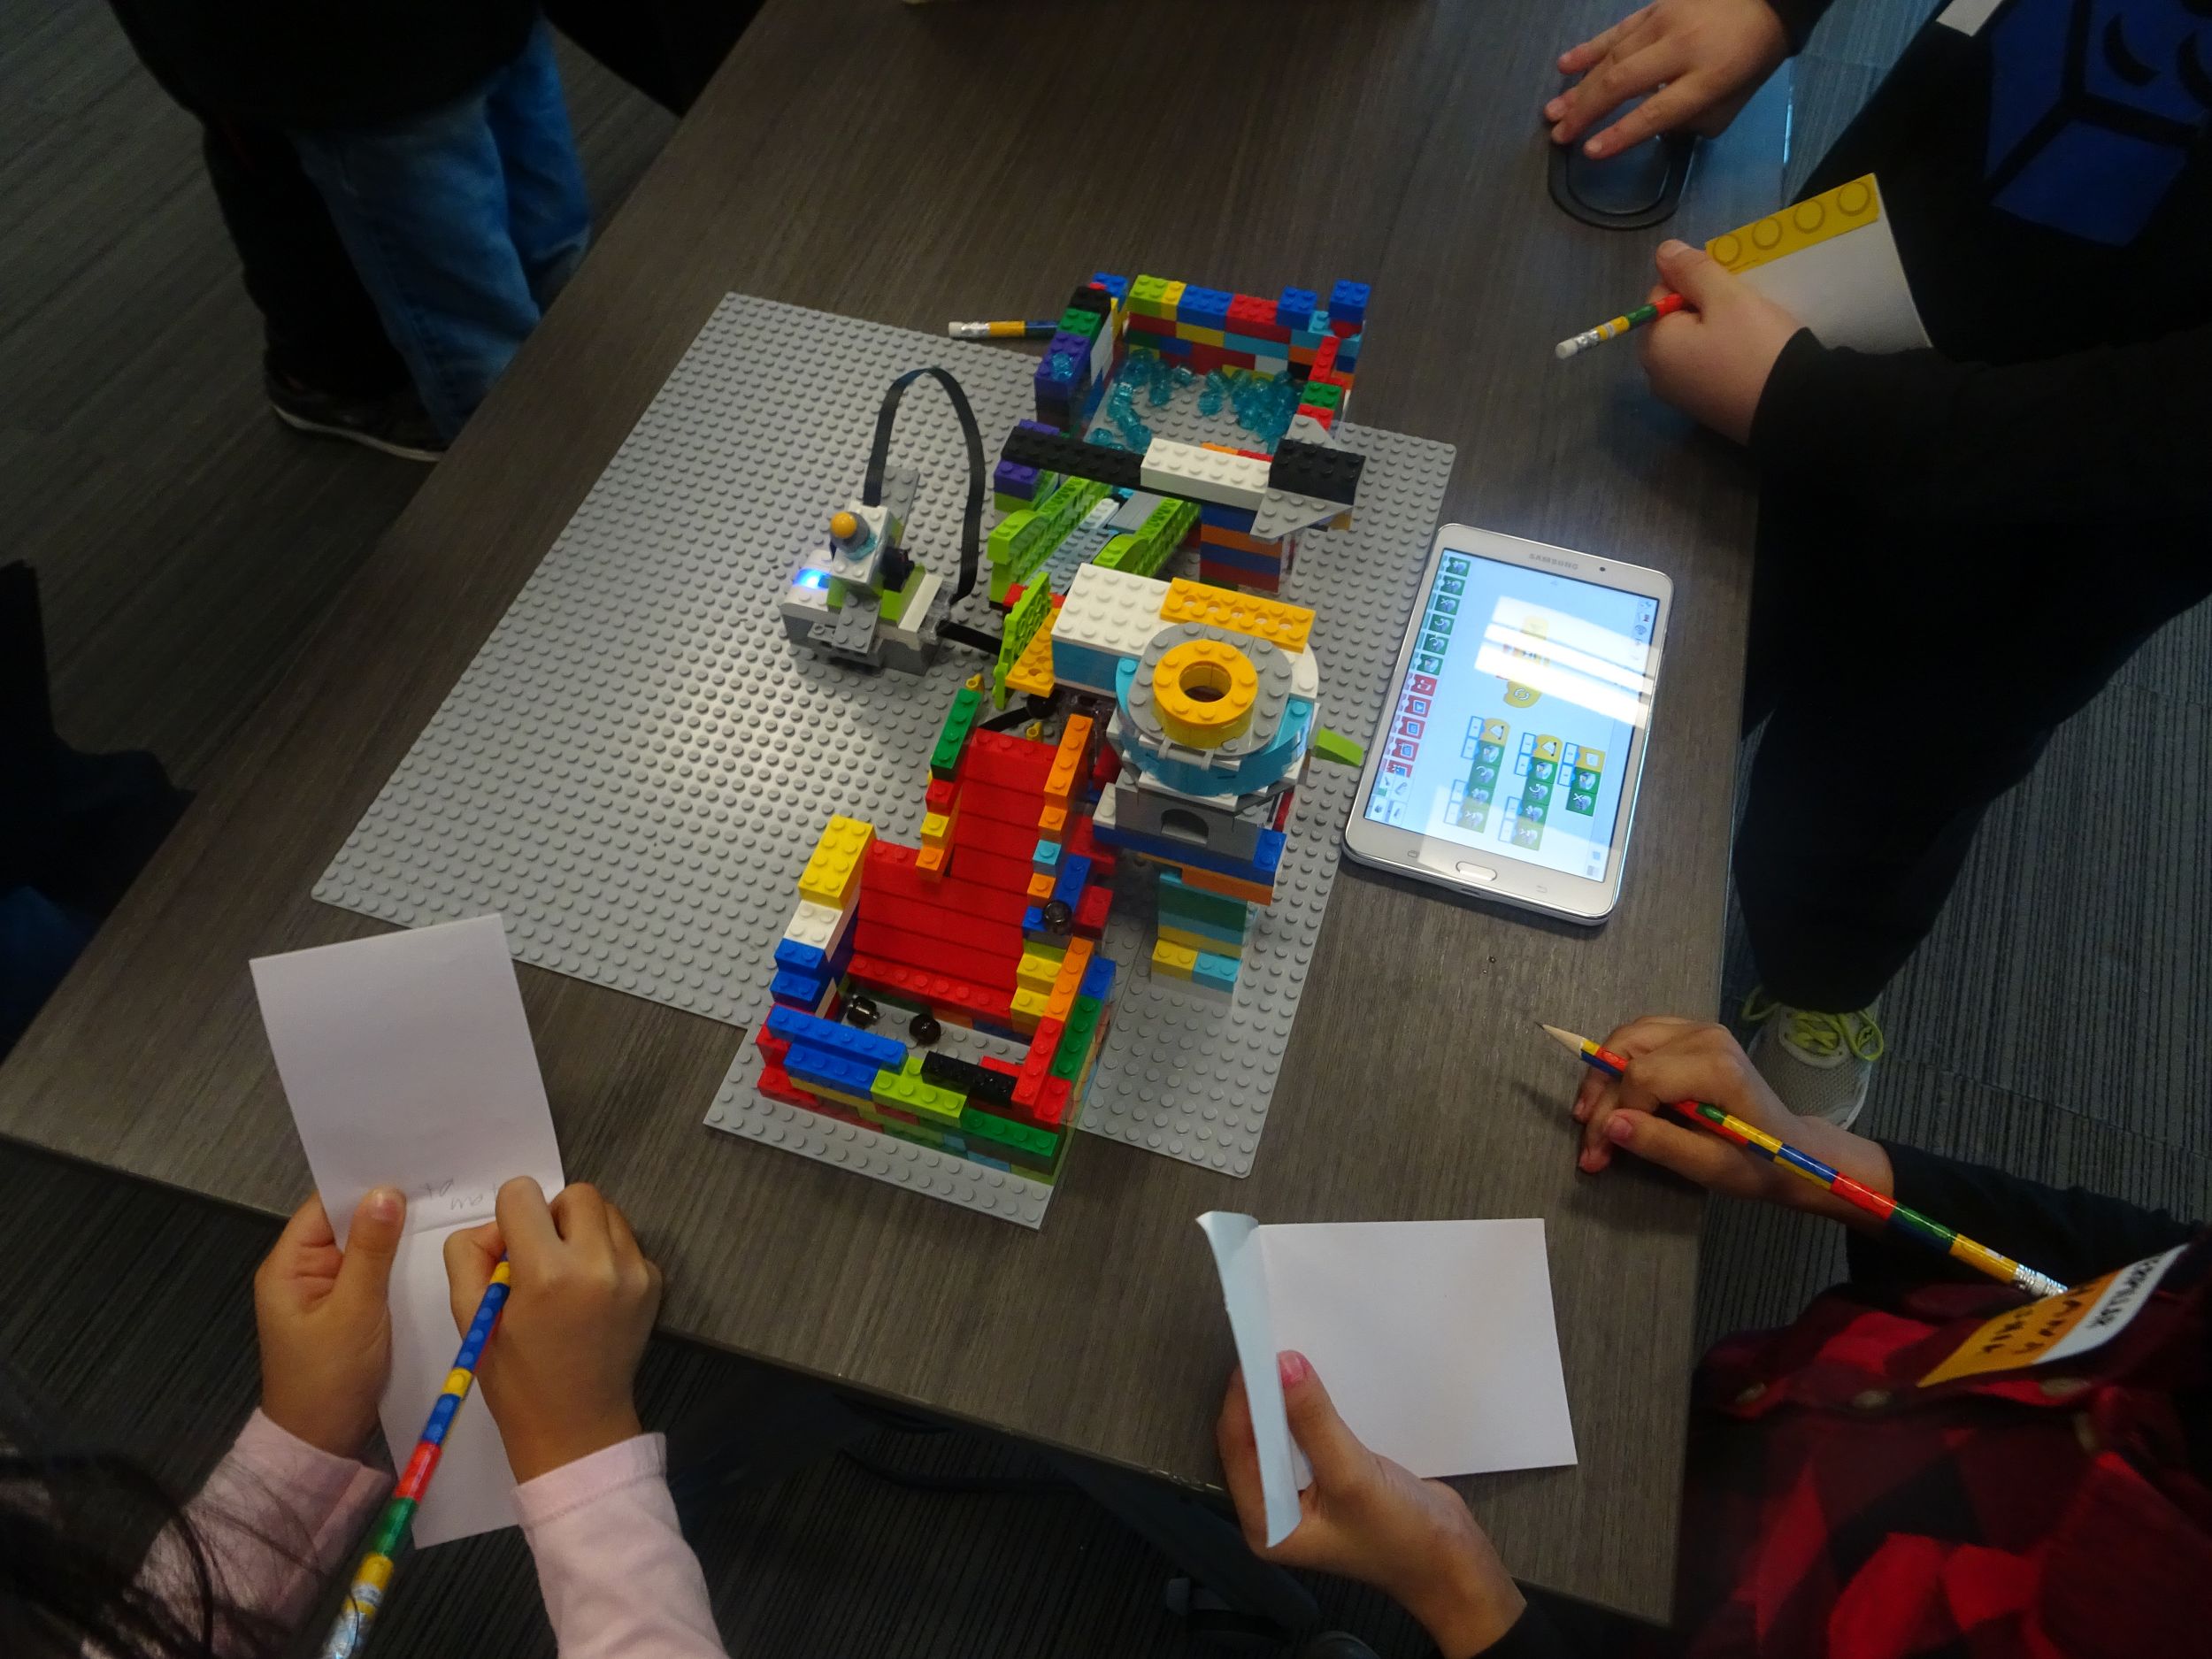 GRADE-SCHOOLERS BRING LEGO-INSPIRED INNOVATIONS TO CATERPILLAR HOUSTON OFFICE 